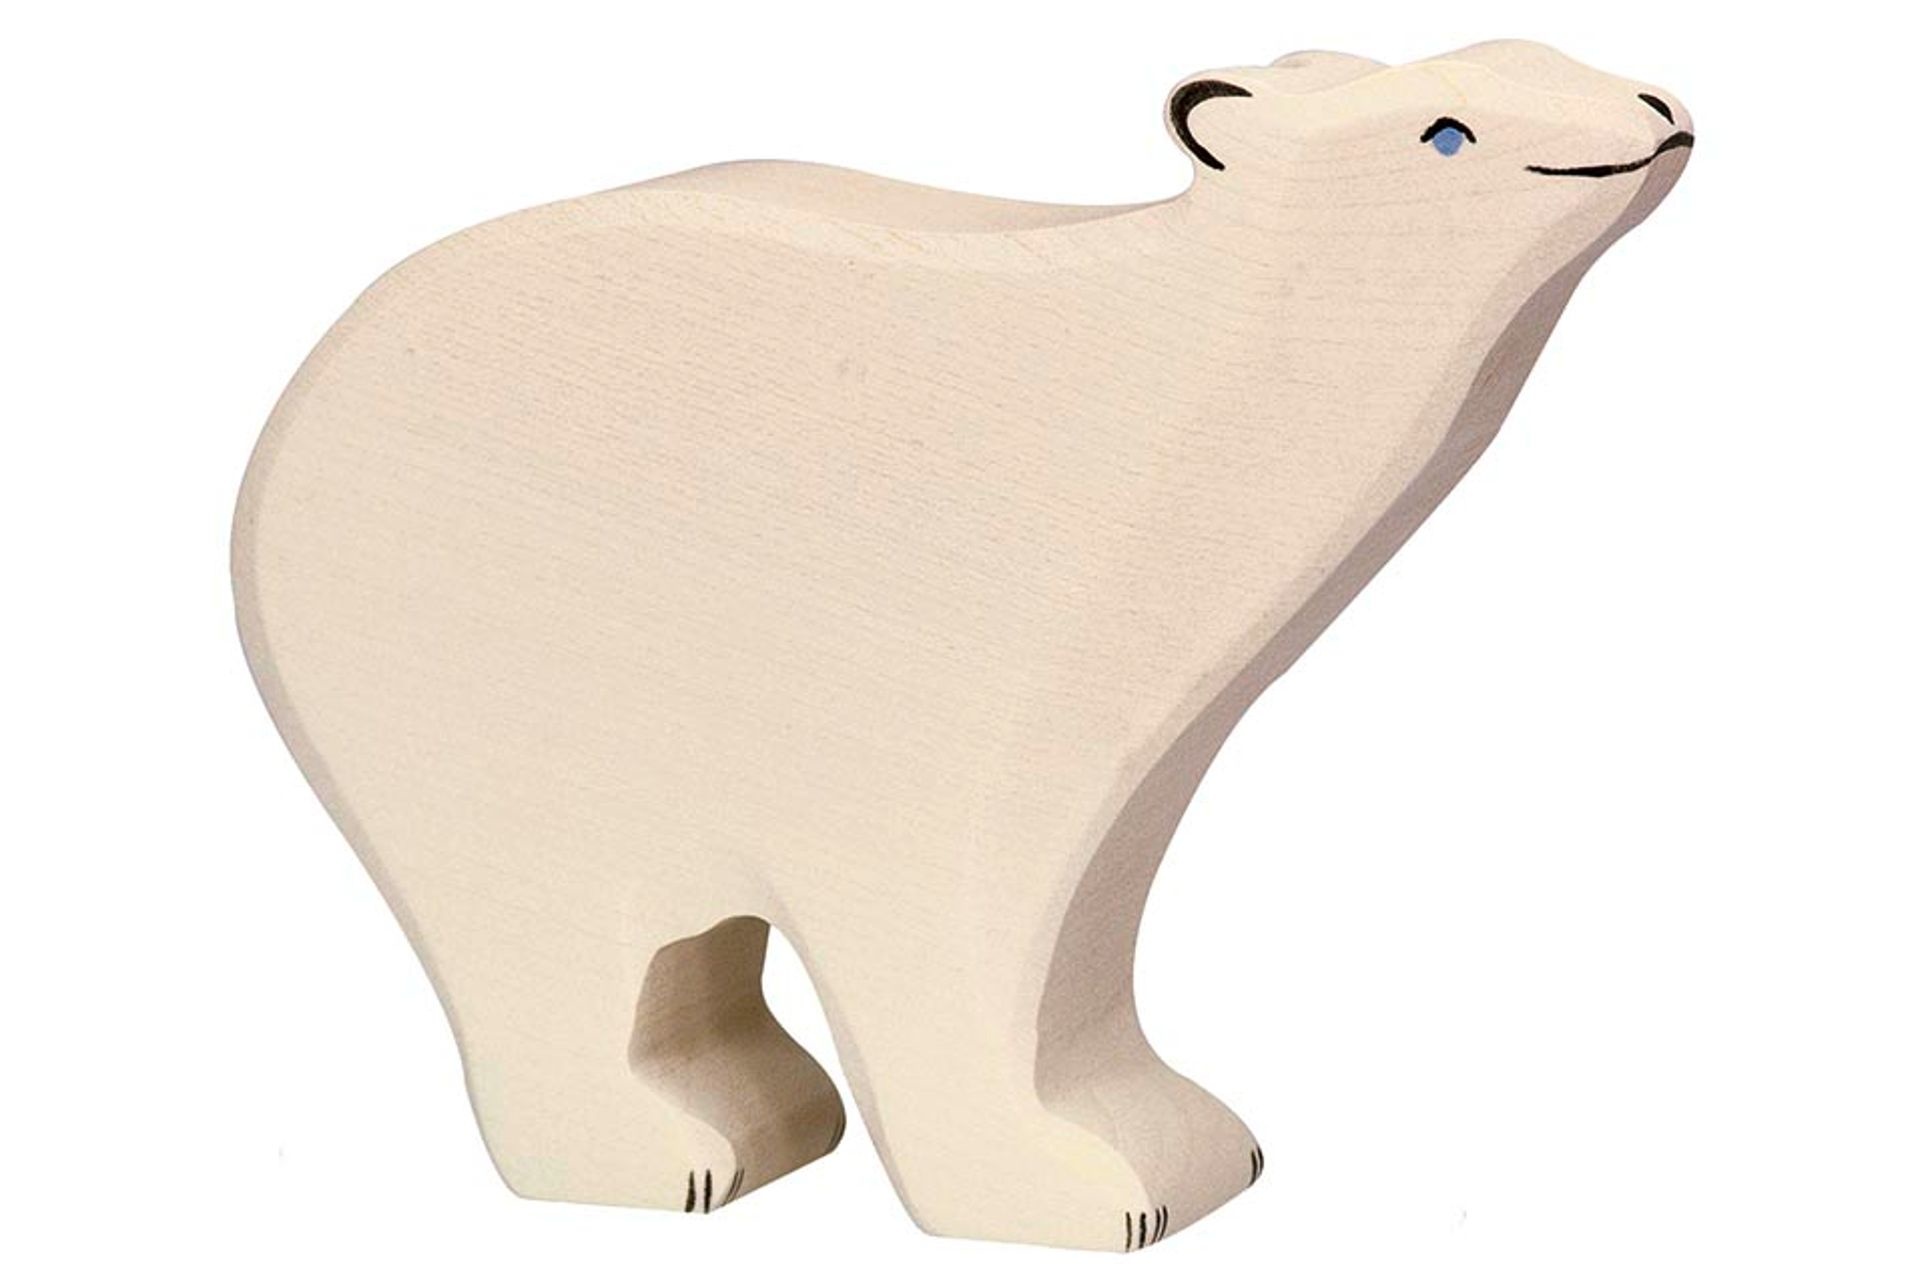 Holztiger Polar bear